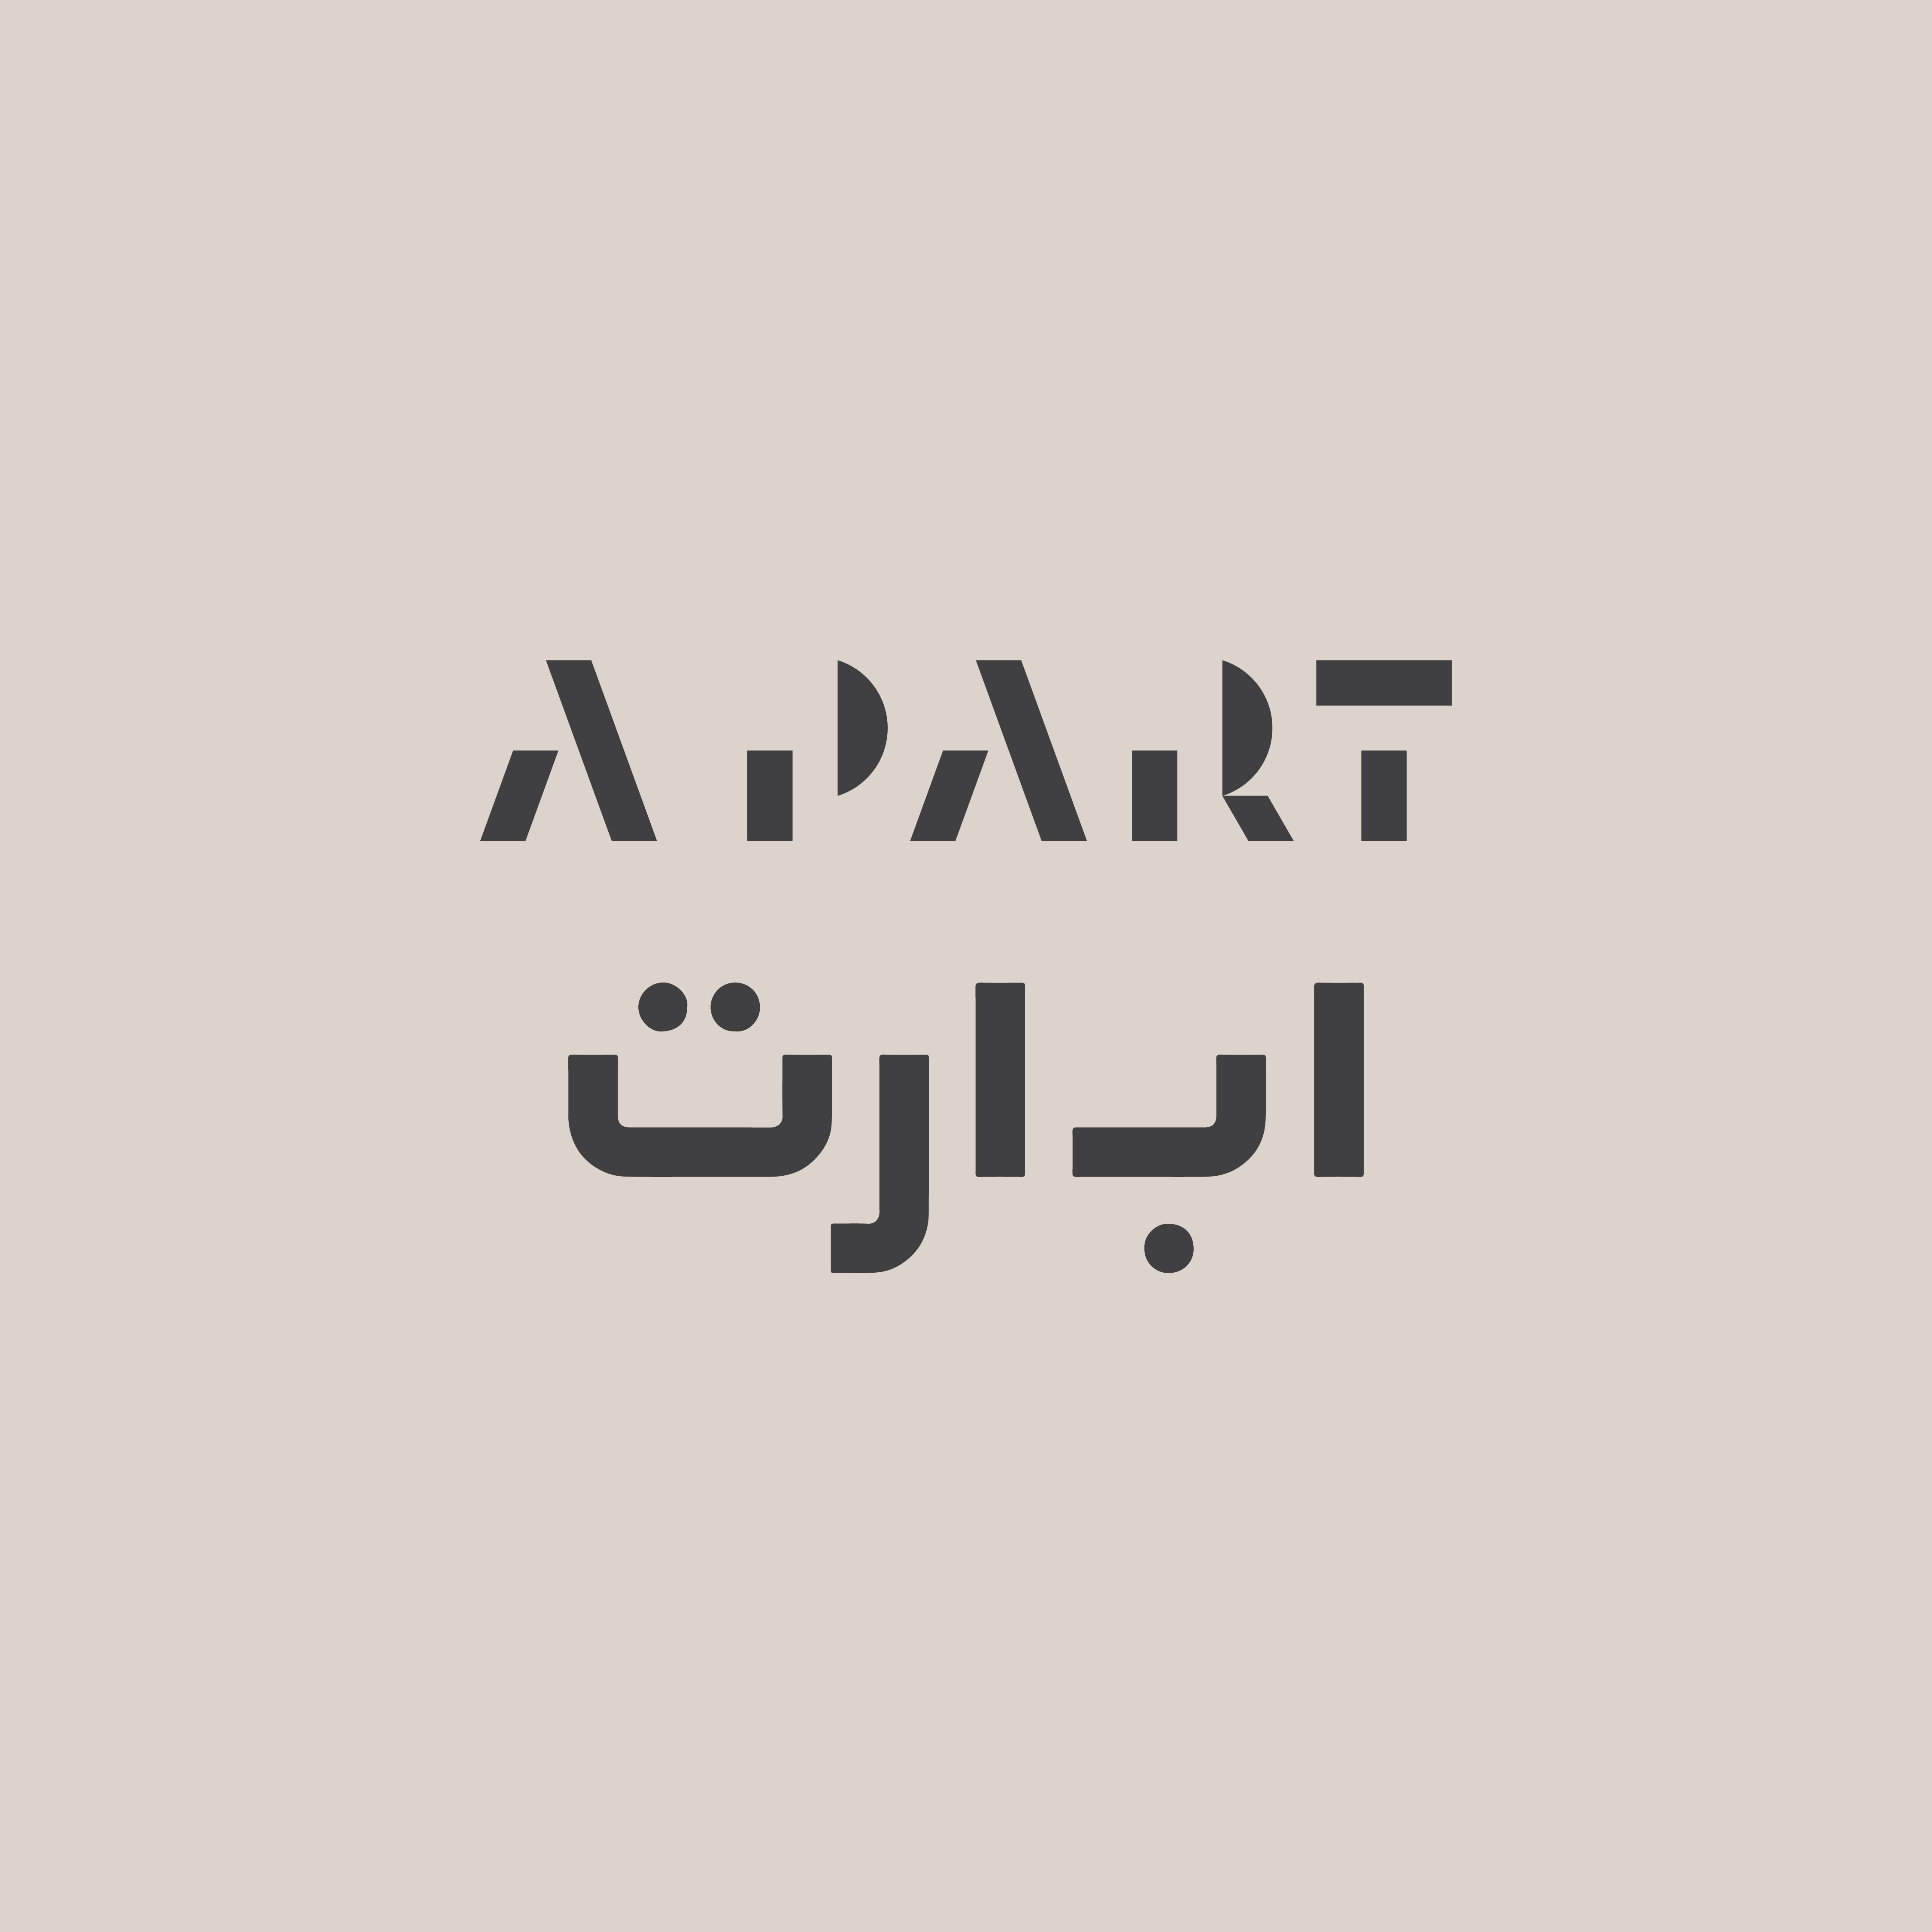 Apart_Cafe logo